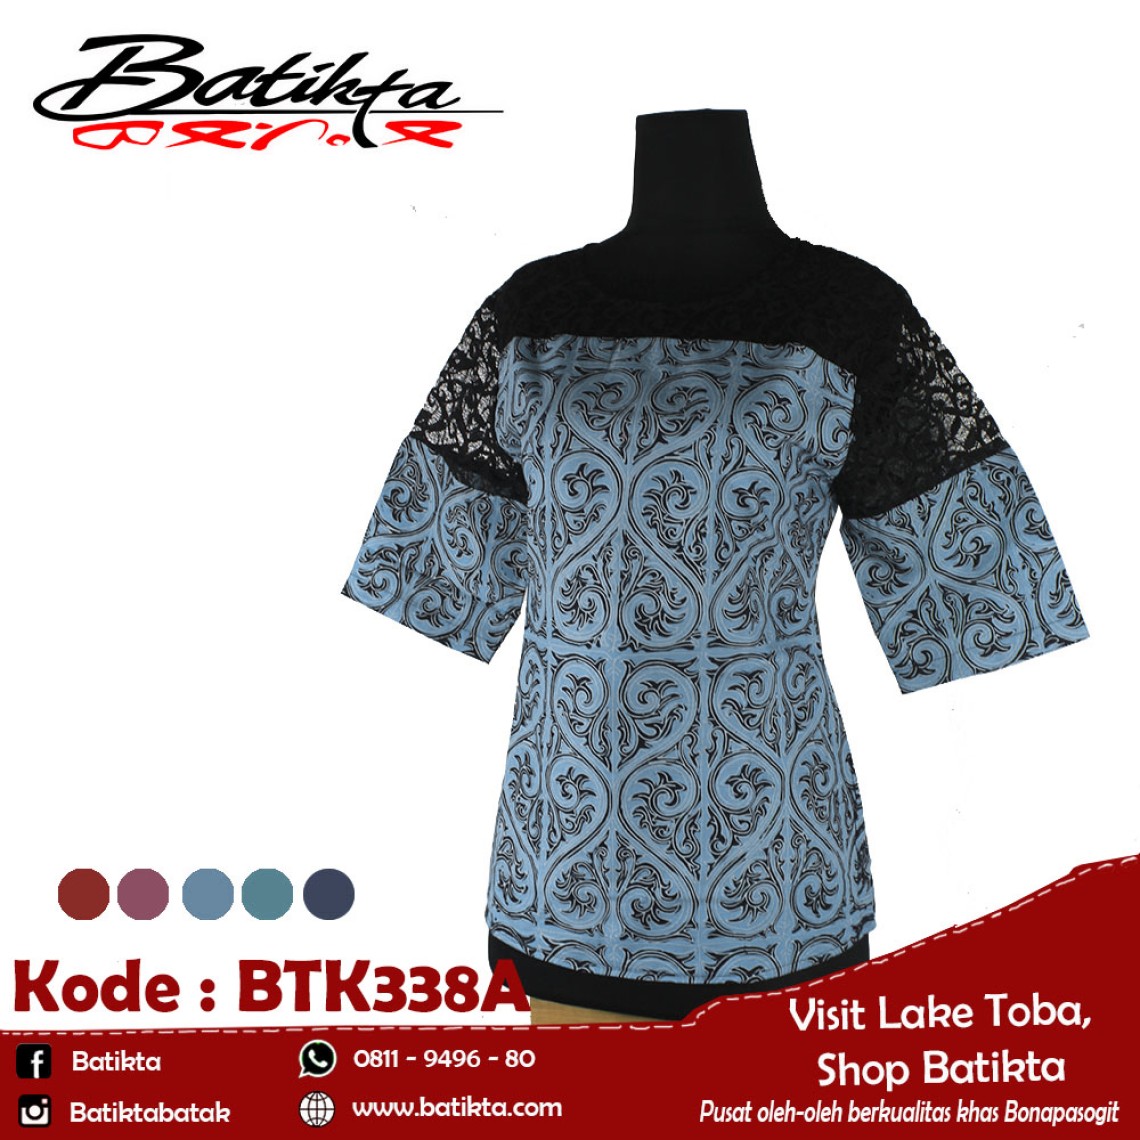 BTK338A Blus Batik Motif Gorga Warna Biru Muda Putih Hitam profile picture